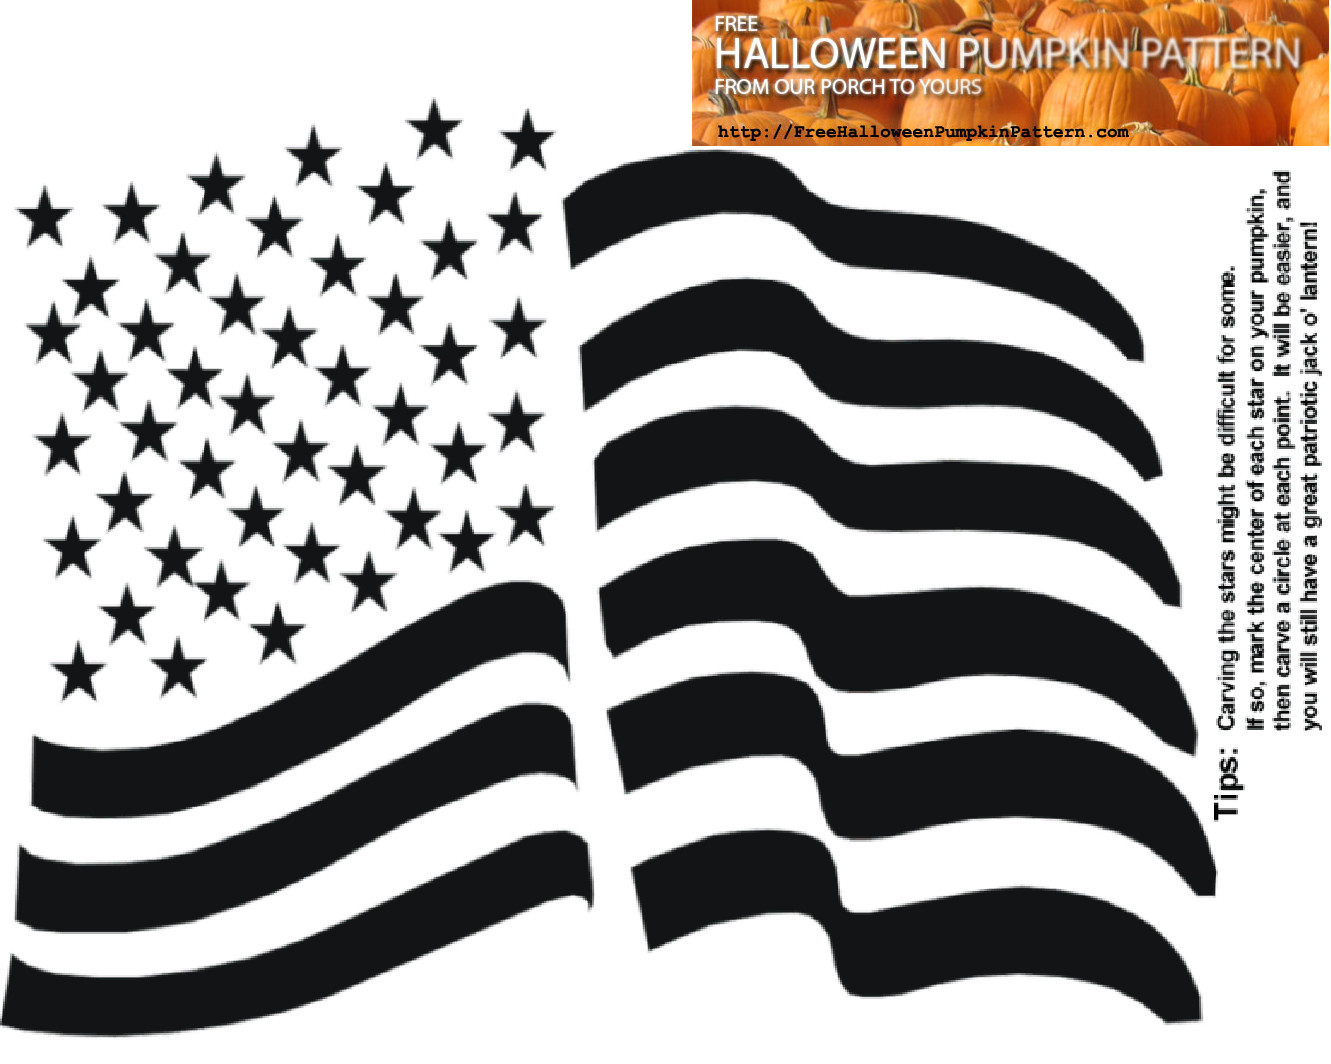 Download a FREE Halloween Pumpkin Pattern